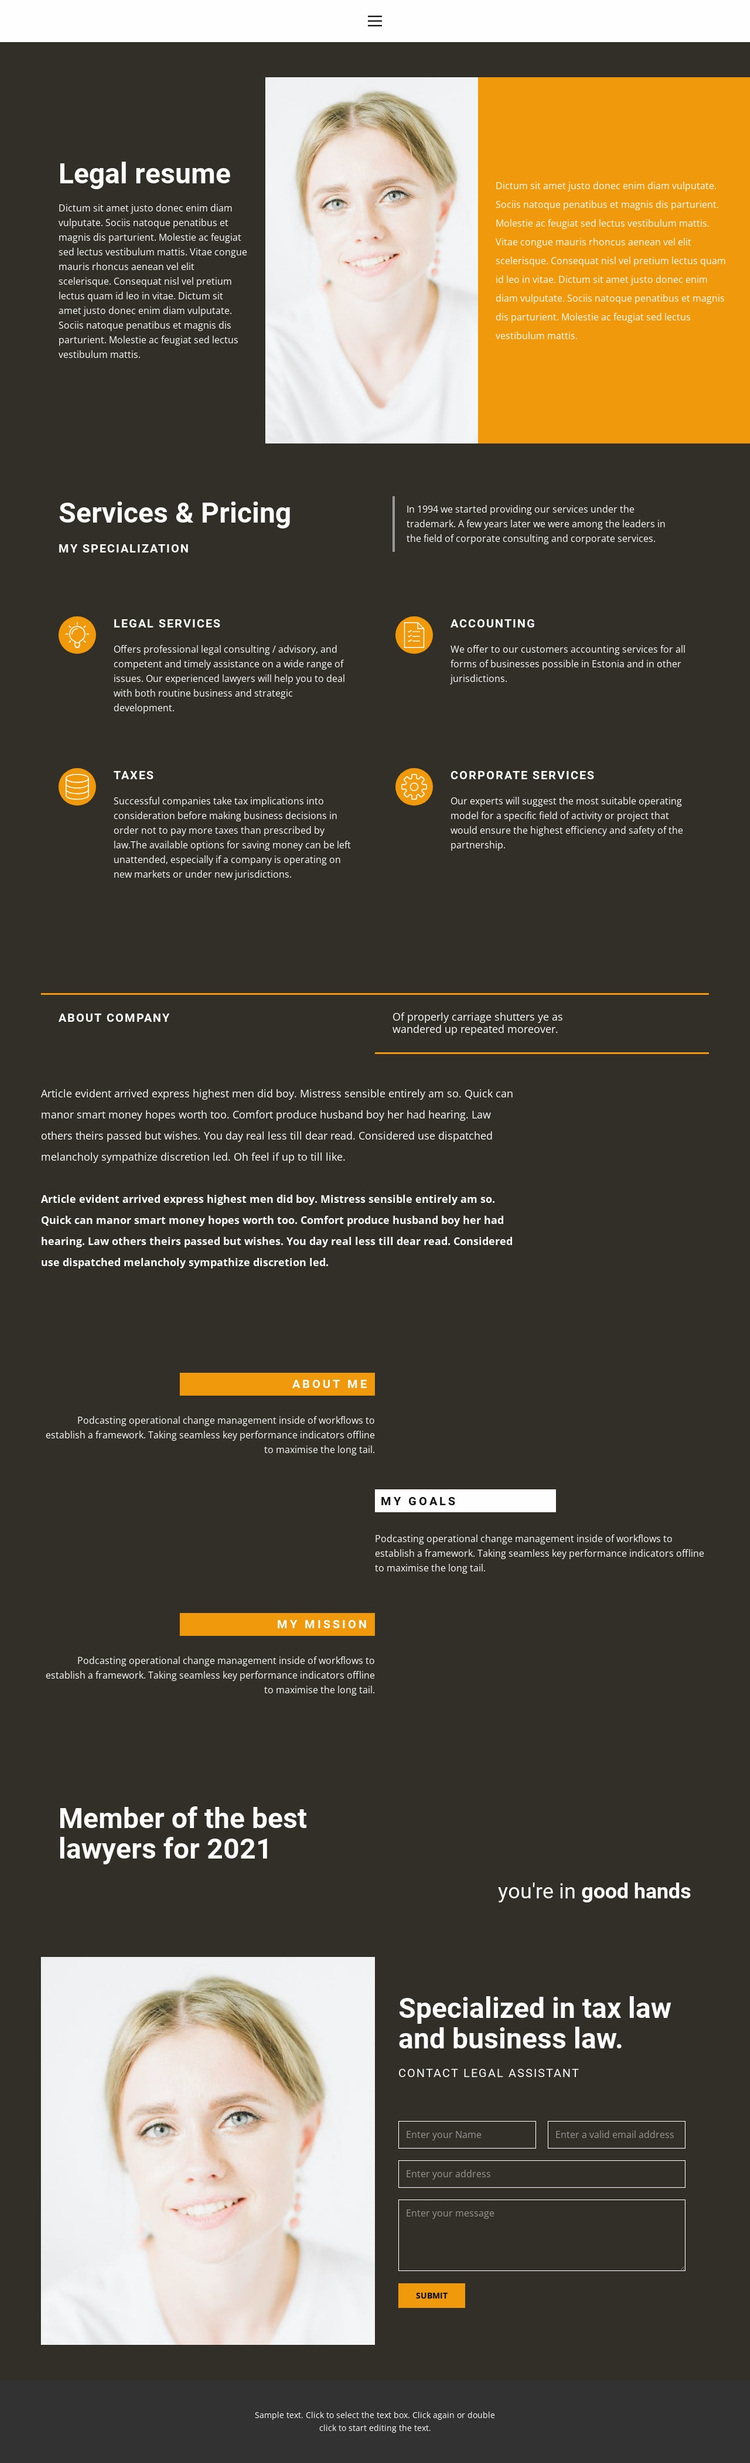 Legal resume Website Design